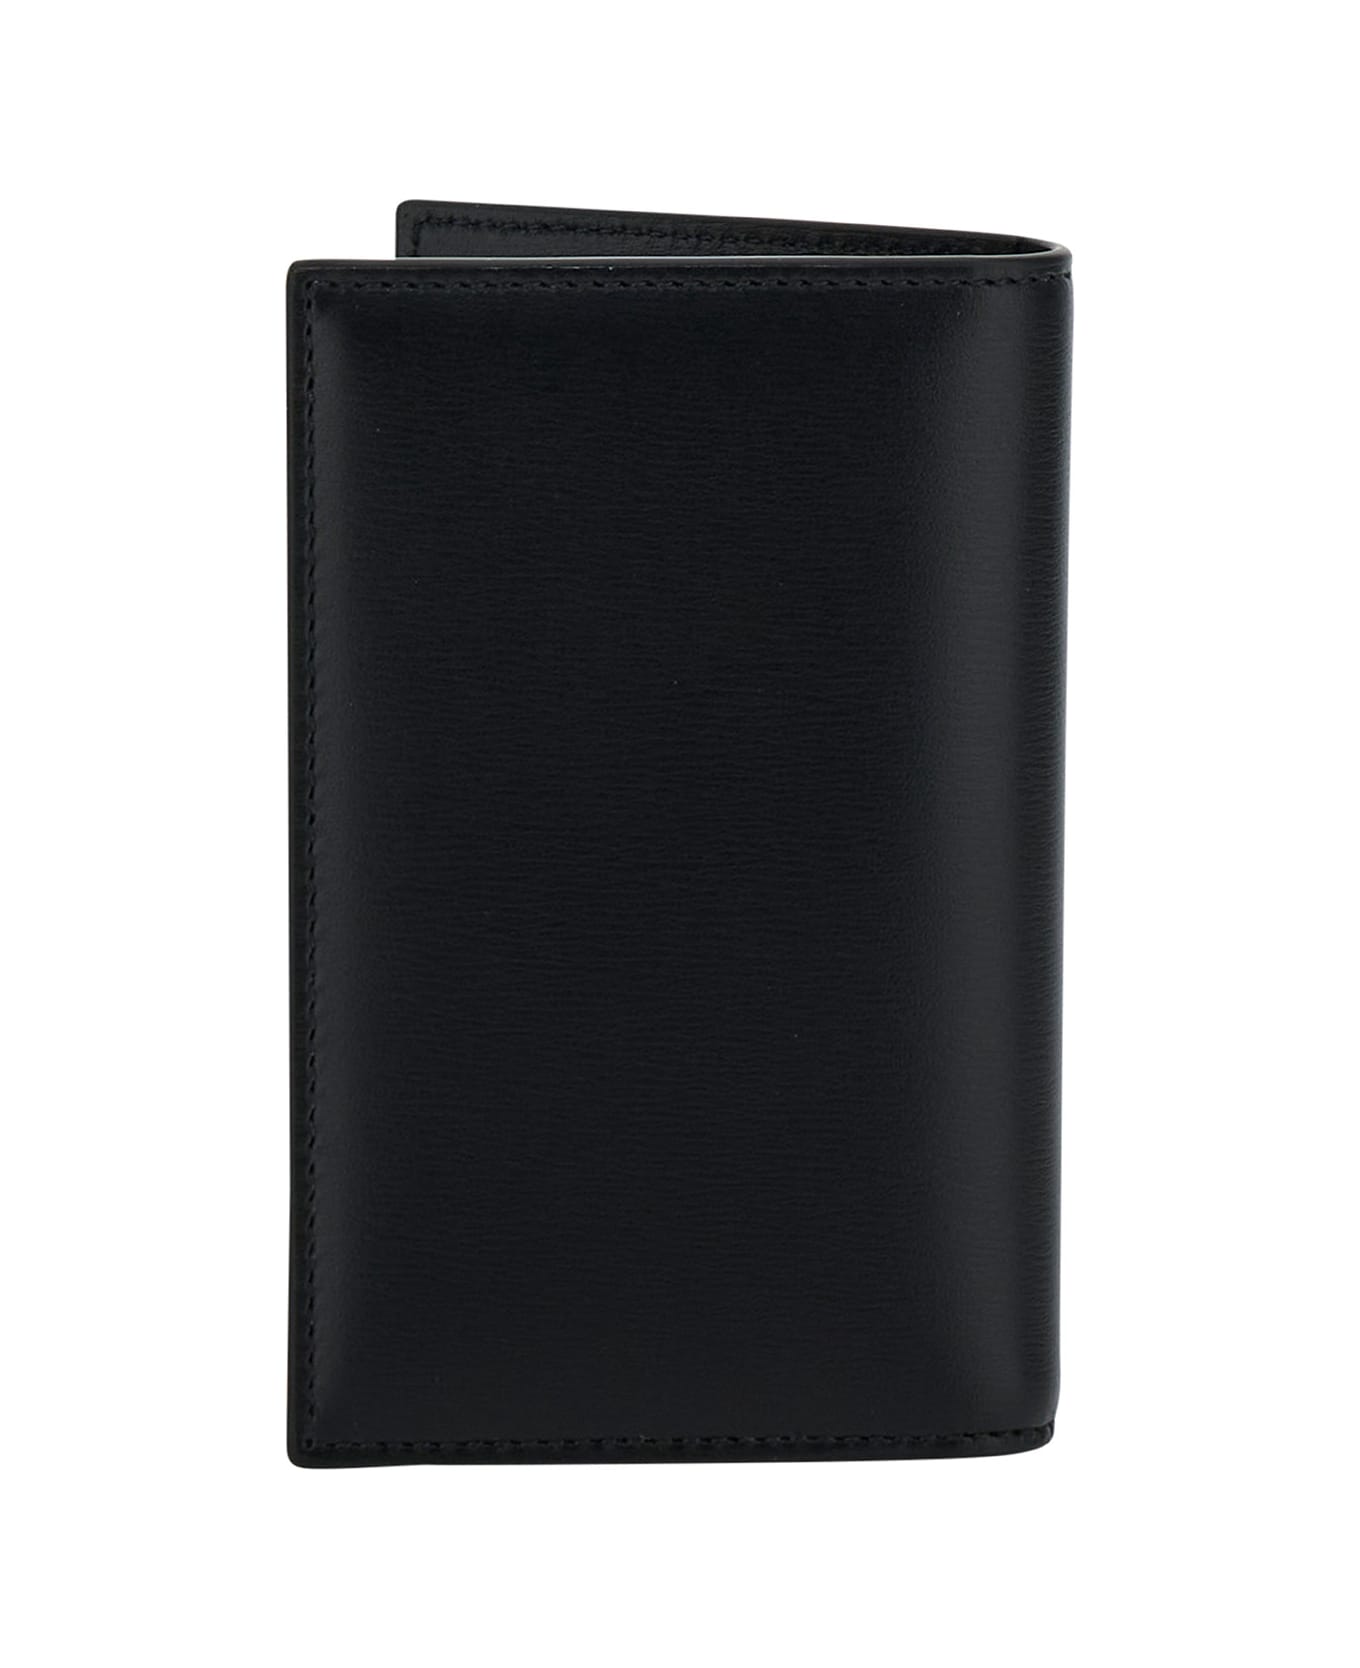 Ferragamo Black Card Holder With Logo In Leather Man - Black アクセサリー